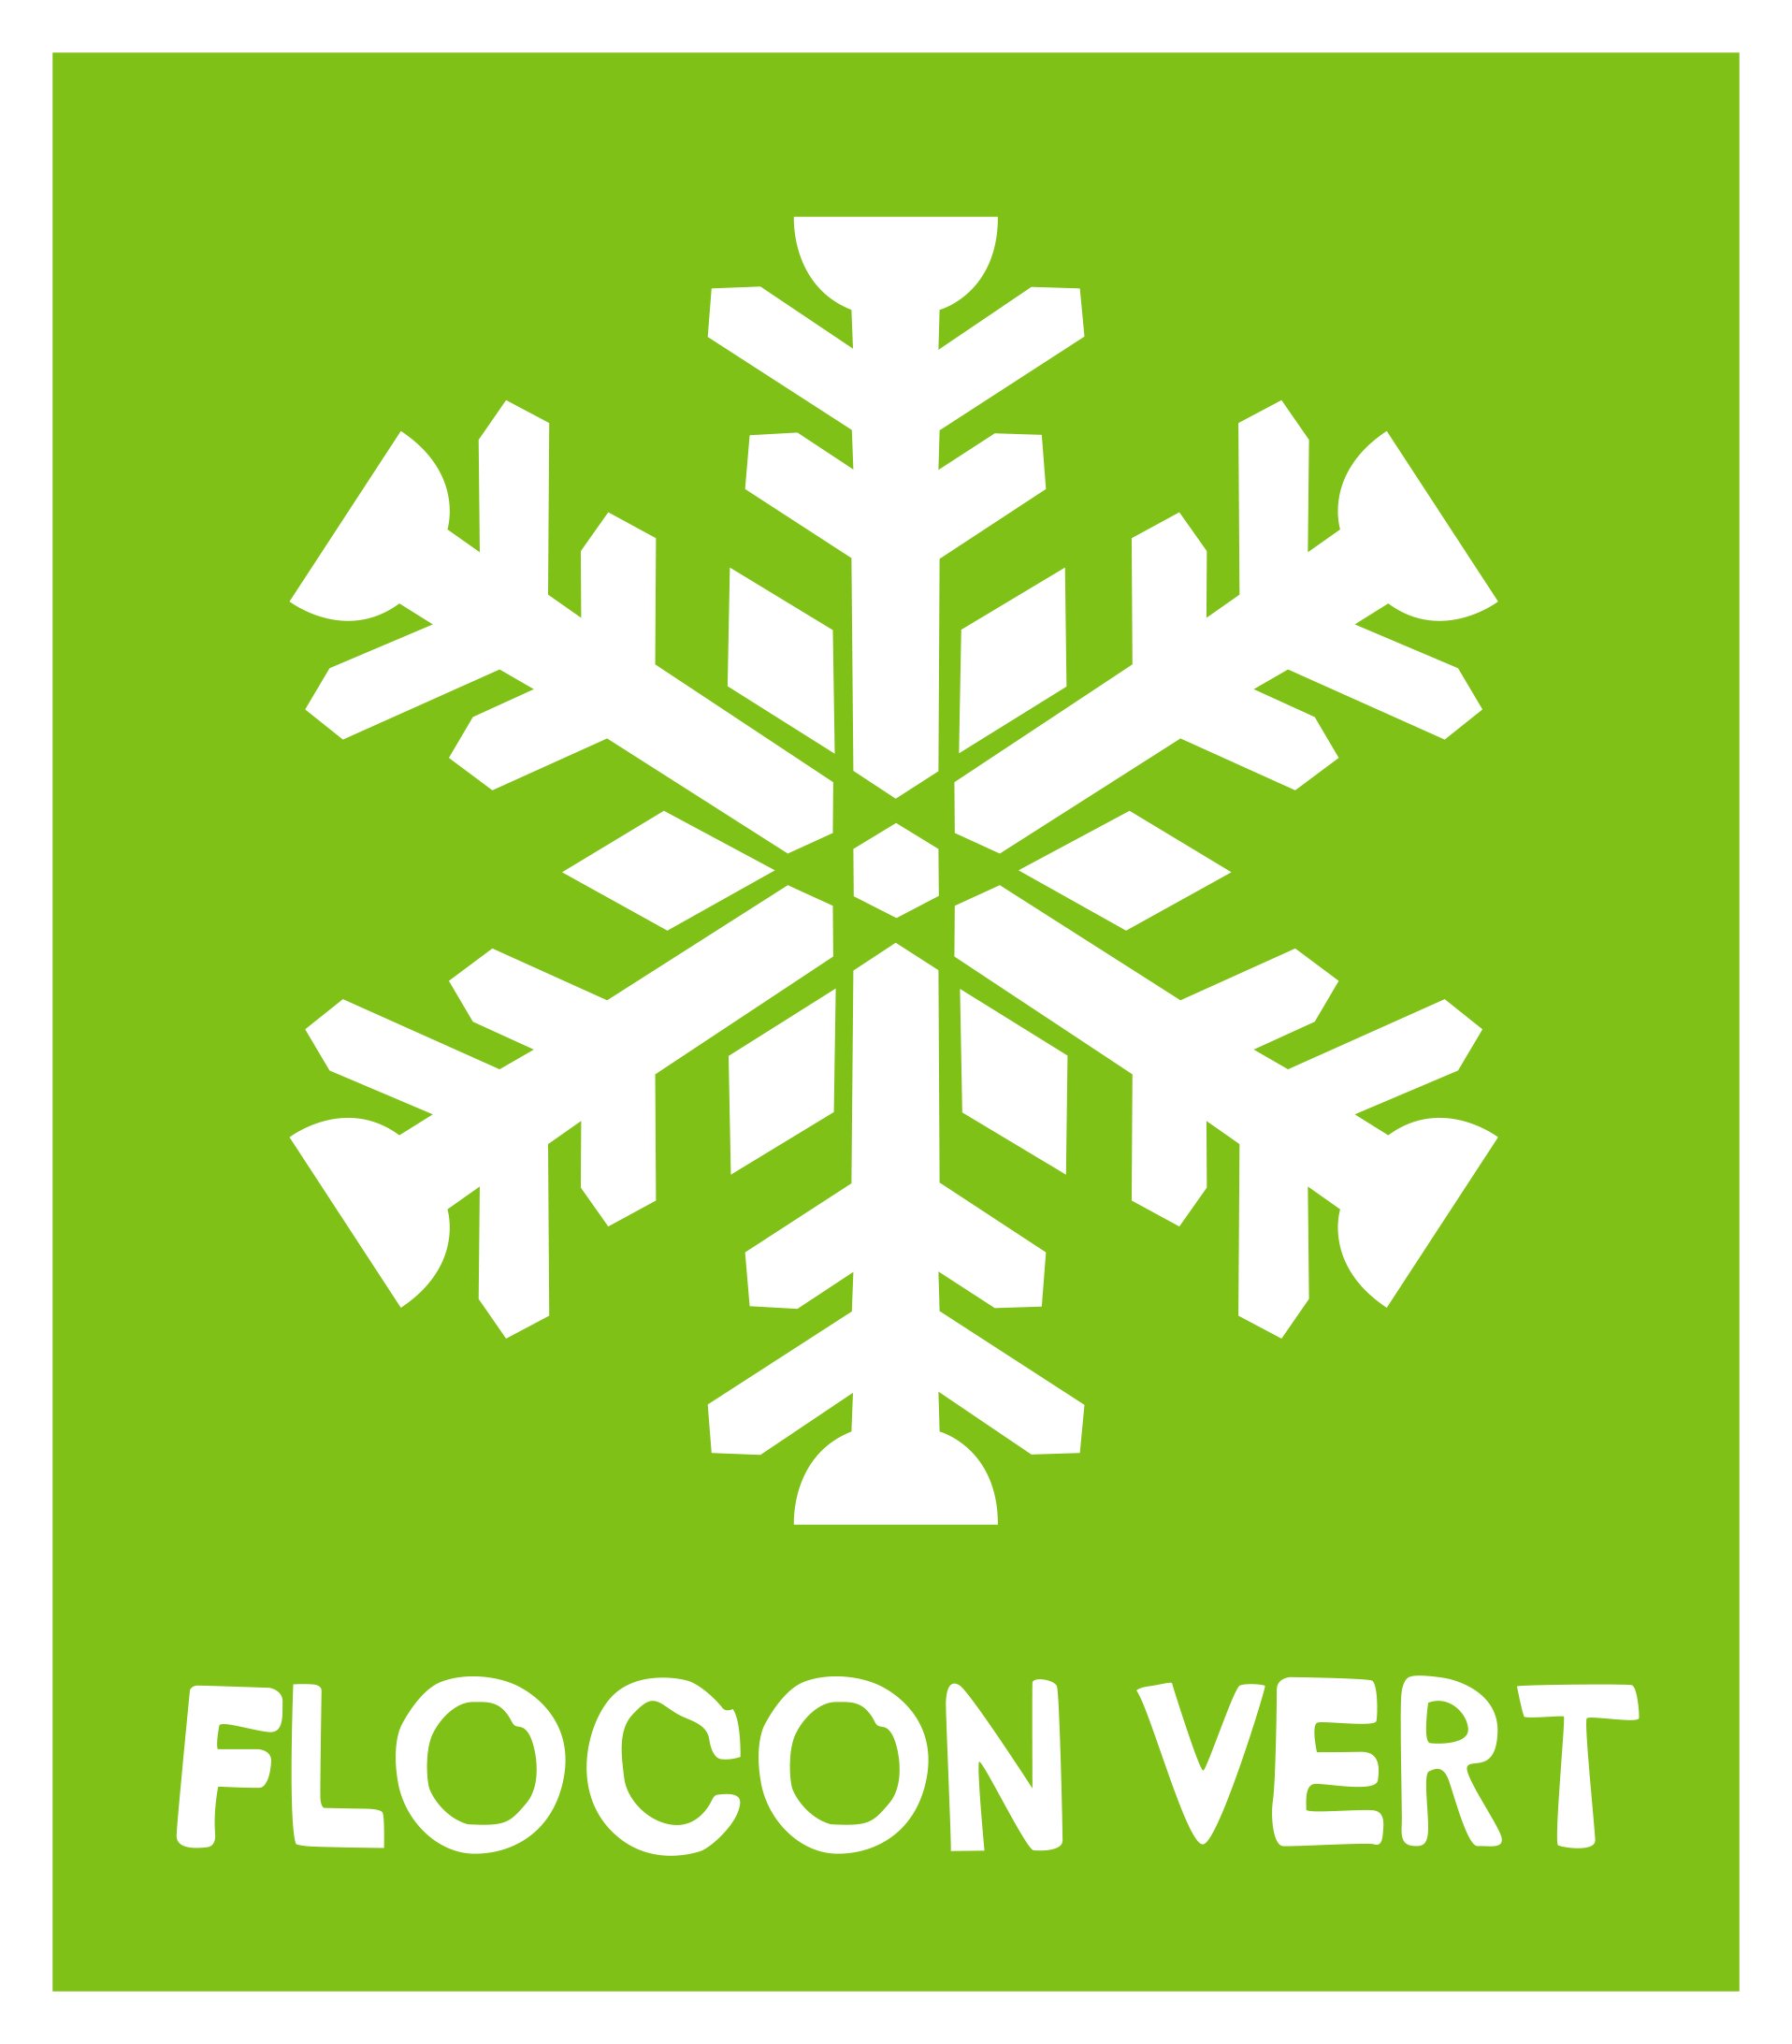 Chamonix dianugerahi kepingan salju keberlanjutan ‘Flocon Vert’ kedua